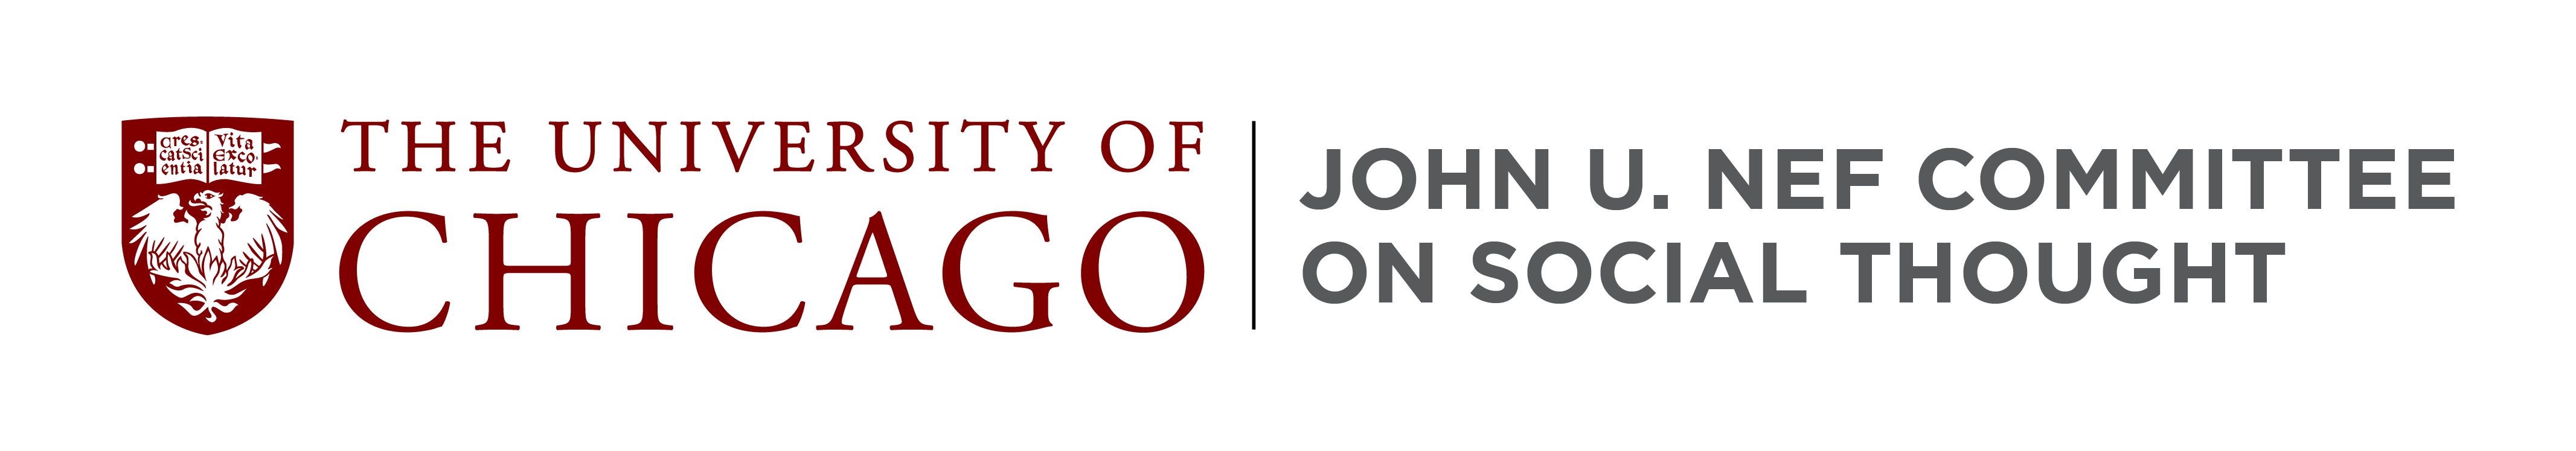 UC John U. Nef Committee on Social Thought Logo